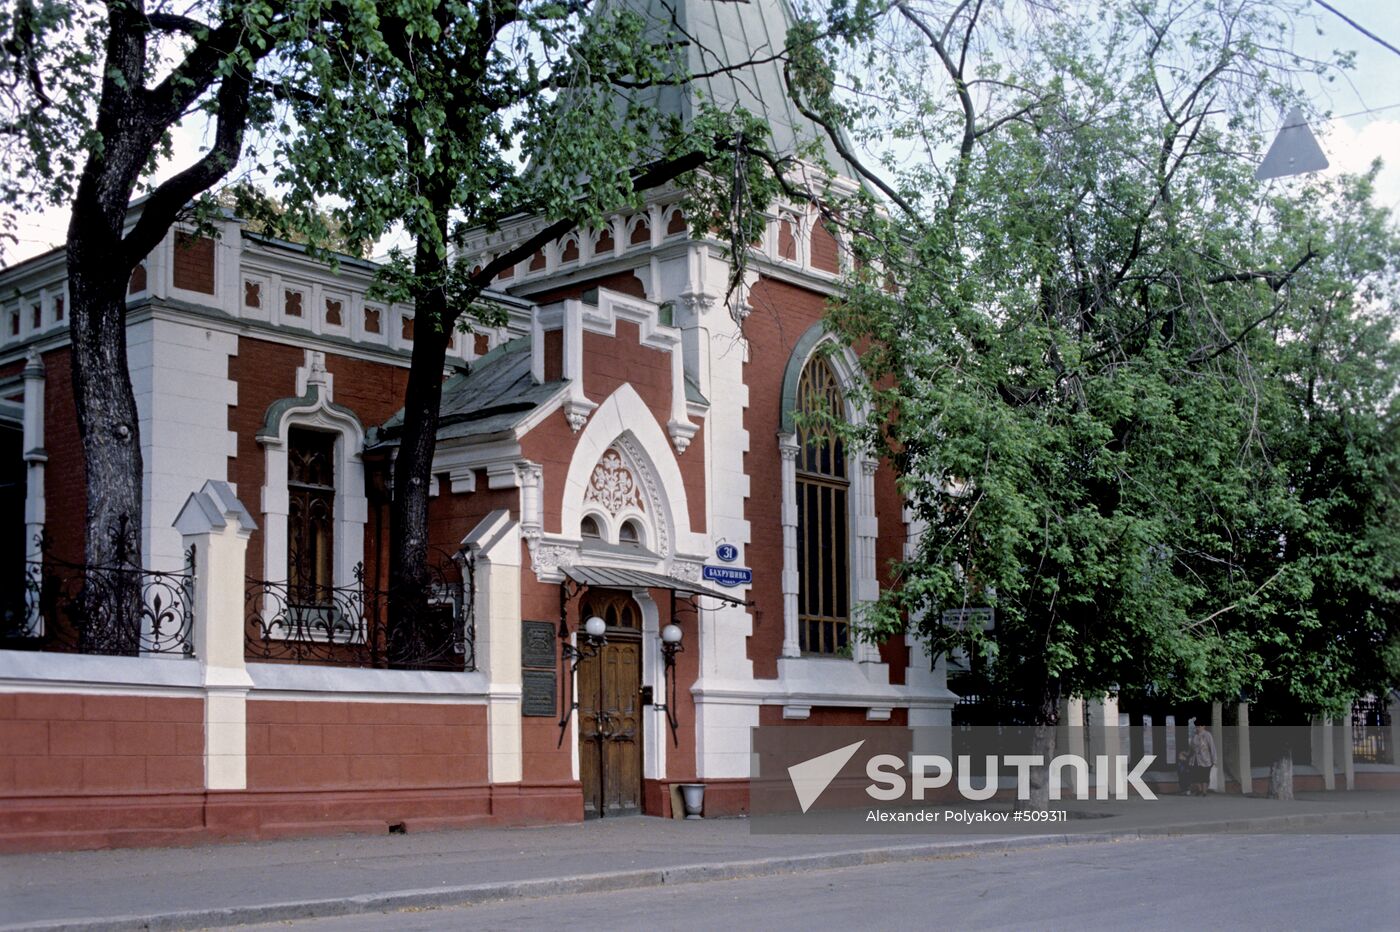 Bakhrushin Theatre Museum